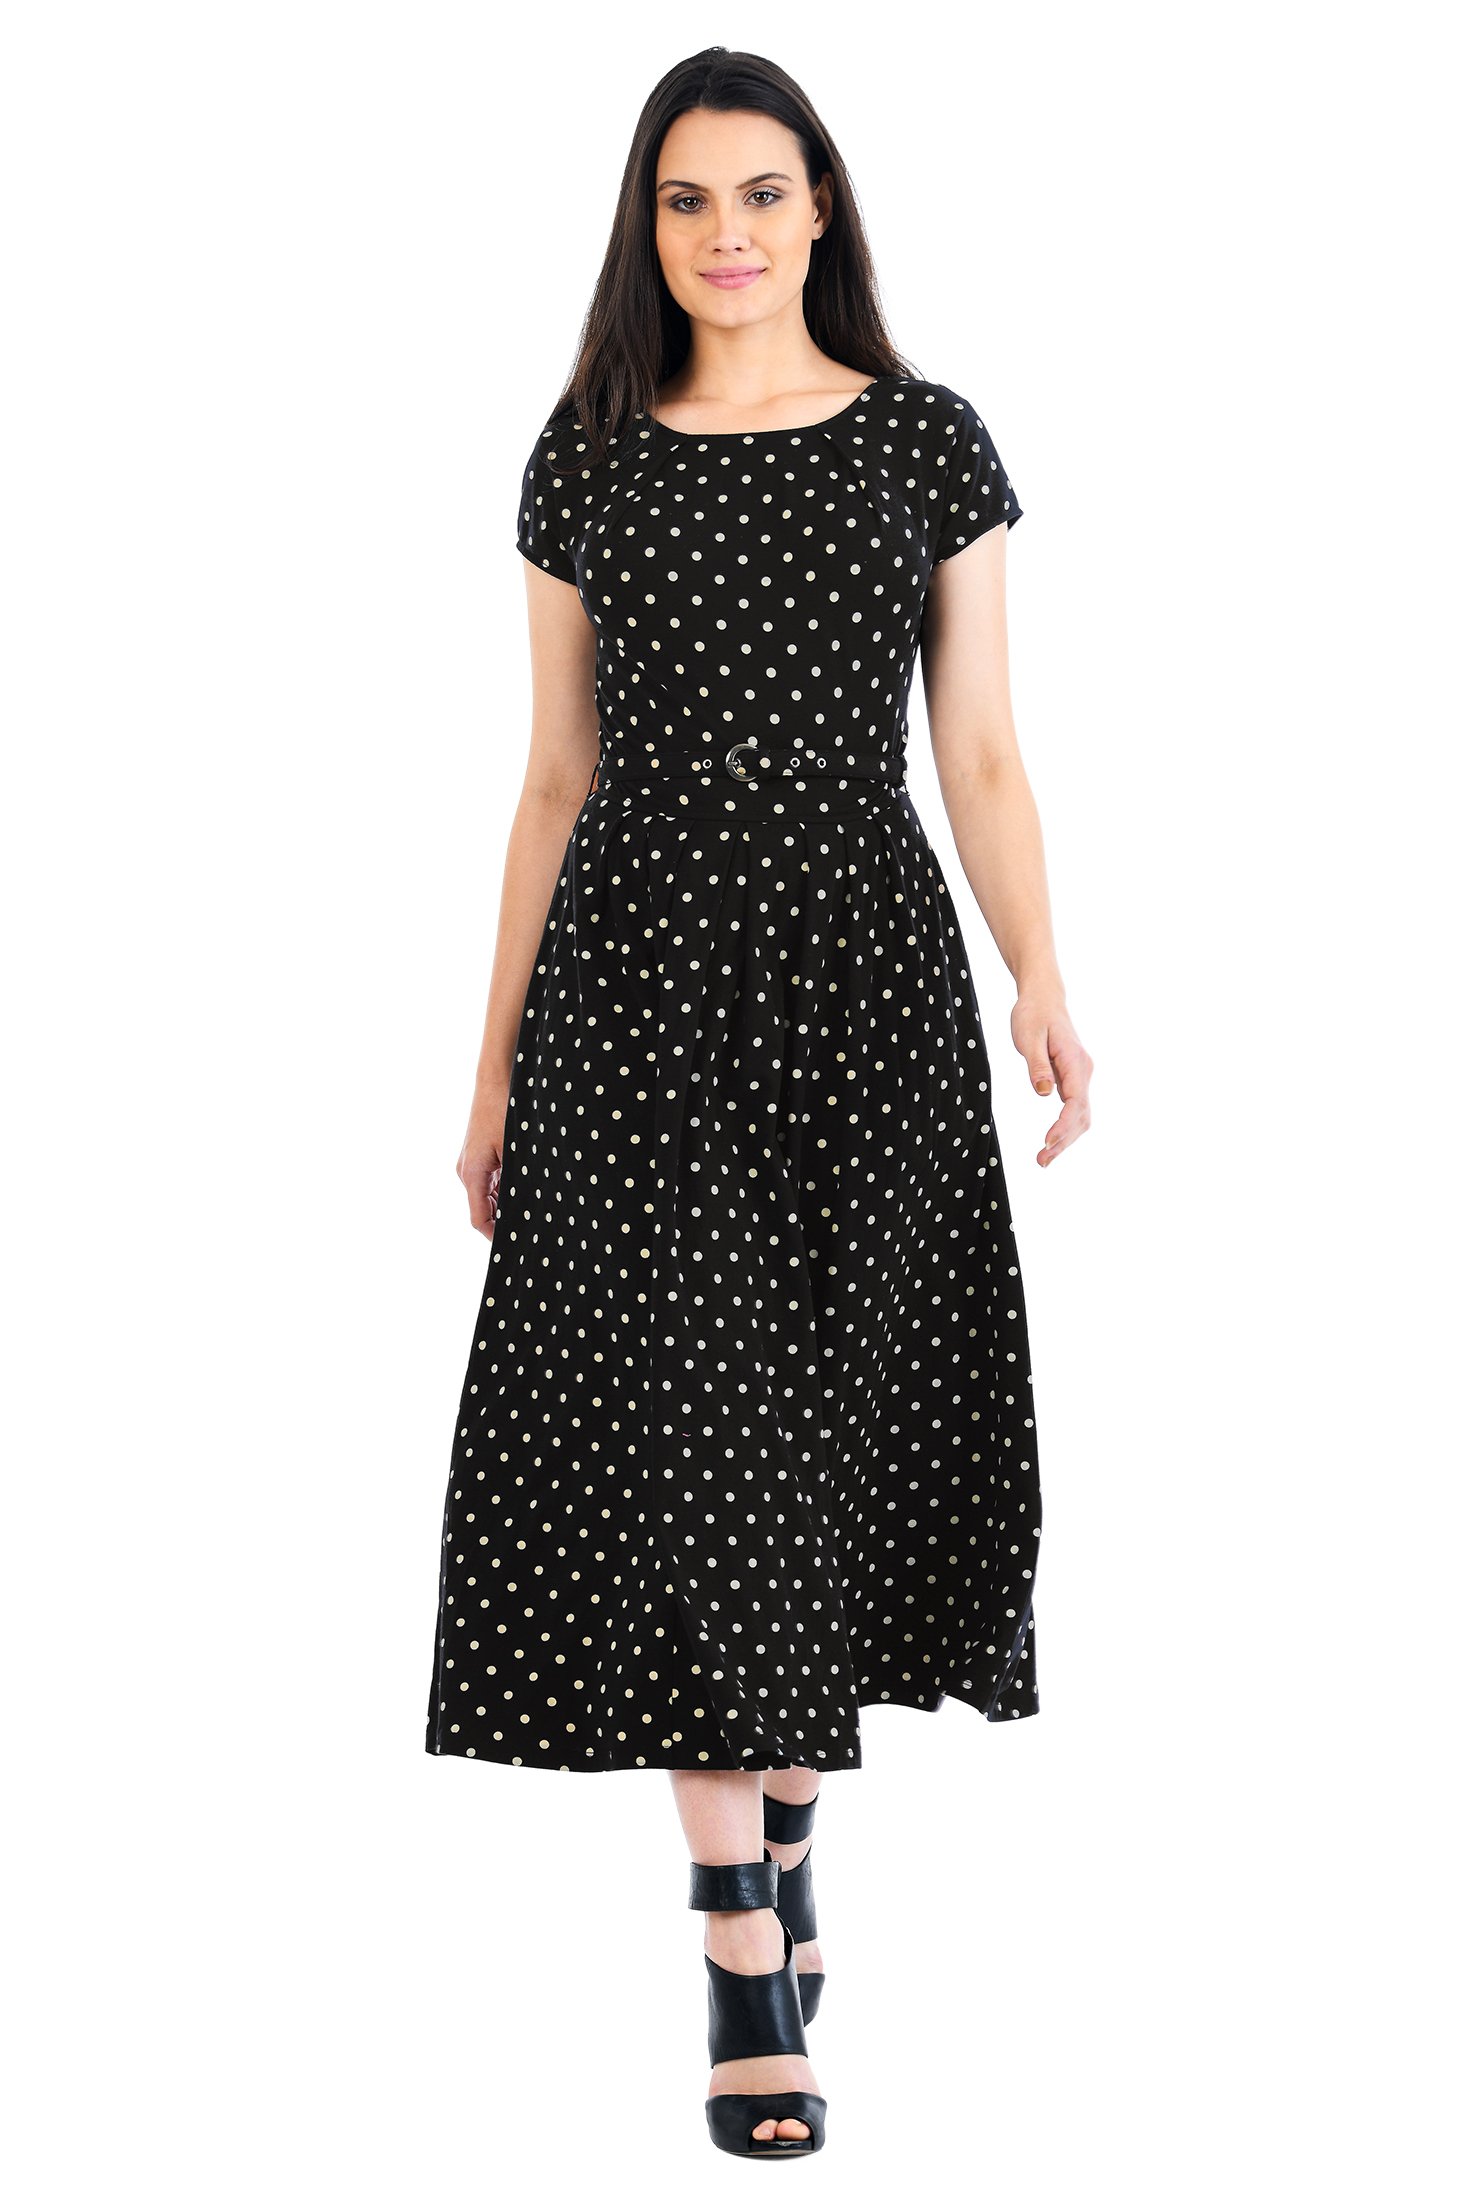 Shop Pleat neck belted polka dot cotton knit dress | eShakti